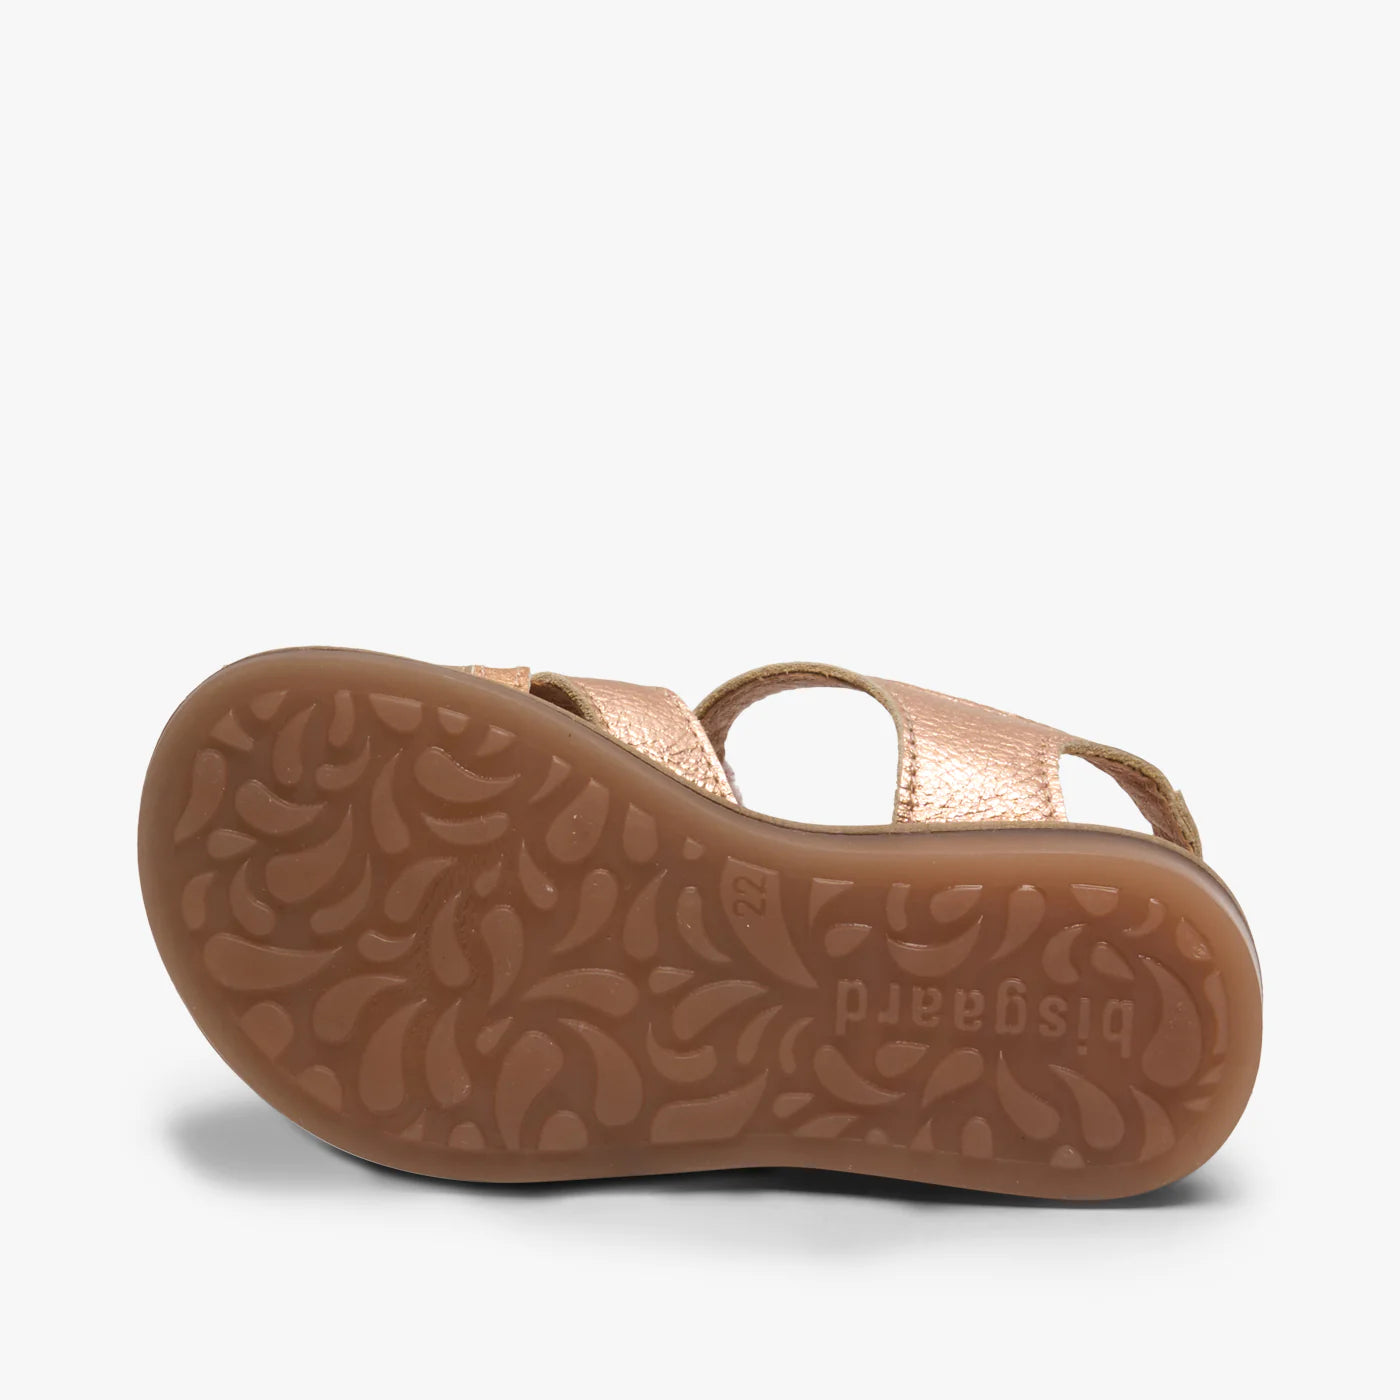 BISGAARD / Cirkeline sandal